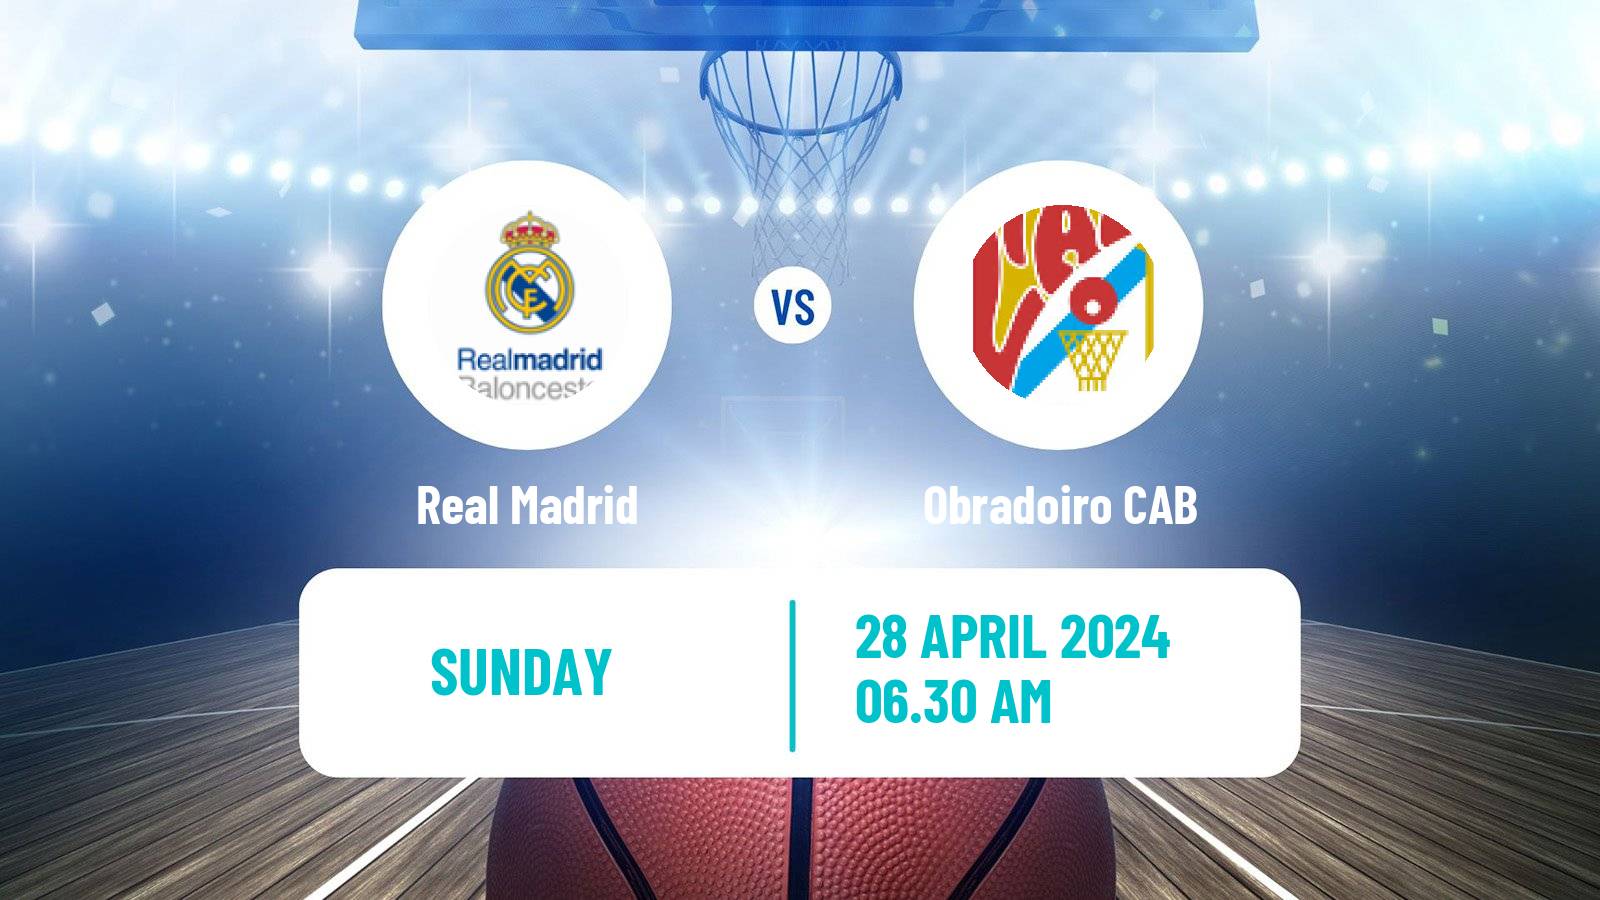 Basketball Spanish ACB League Real Madrid - Obradoiro CAB